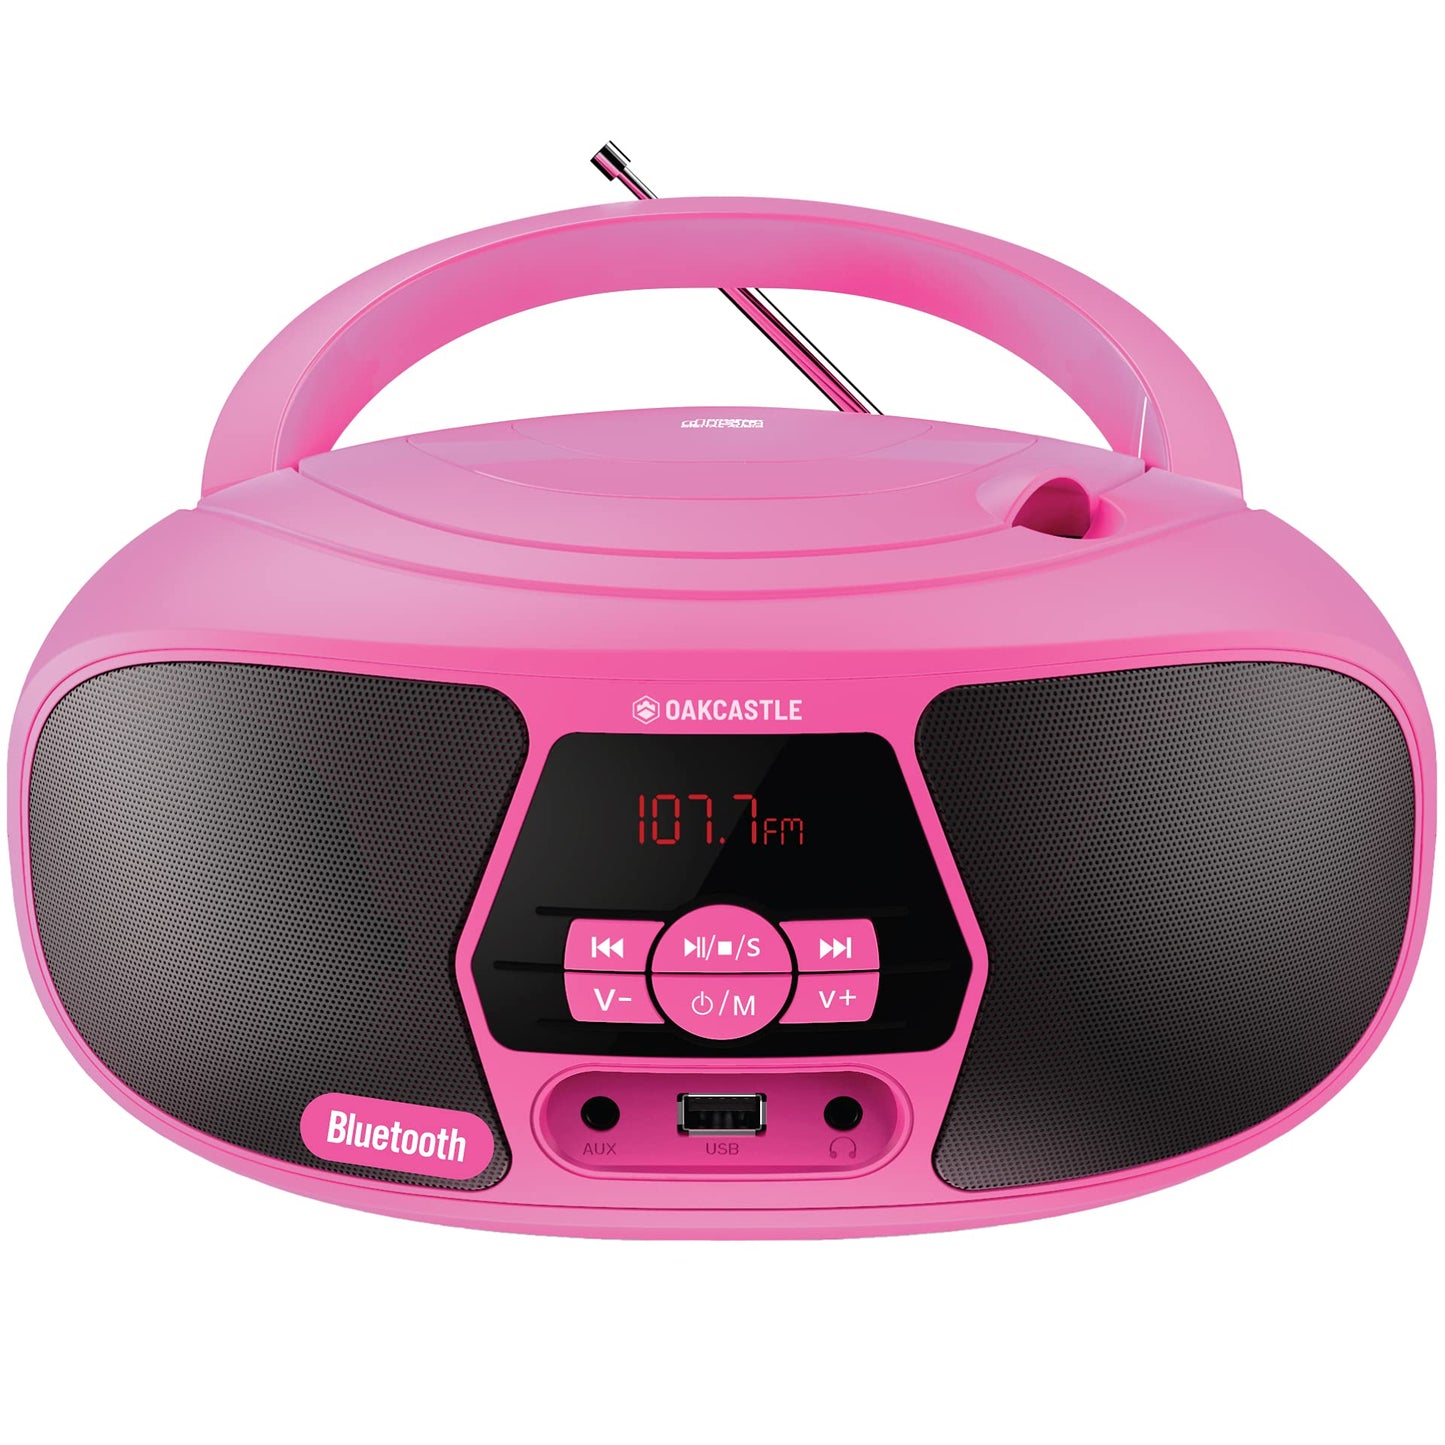 Oakcastle BX200 Portable CD Player Boombox Pink Bluetooth FM Radio USB & Aux